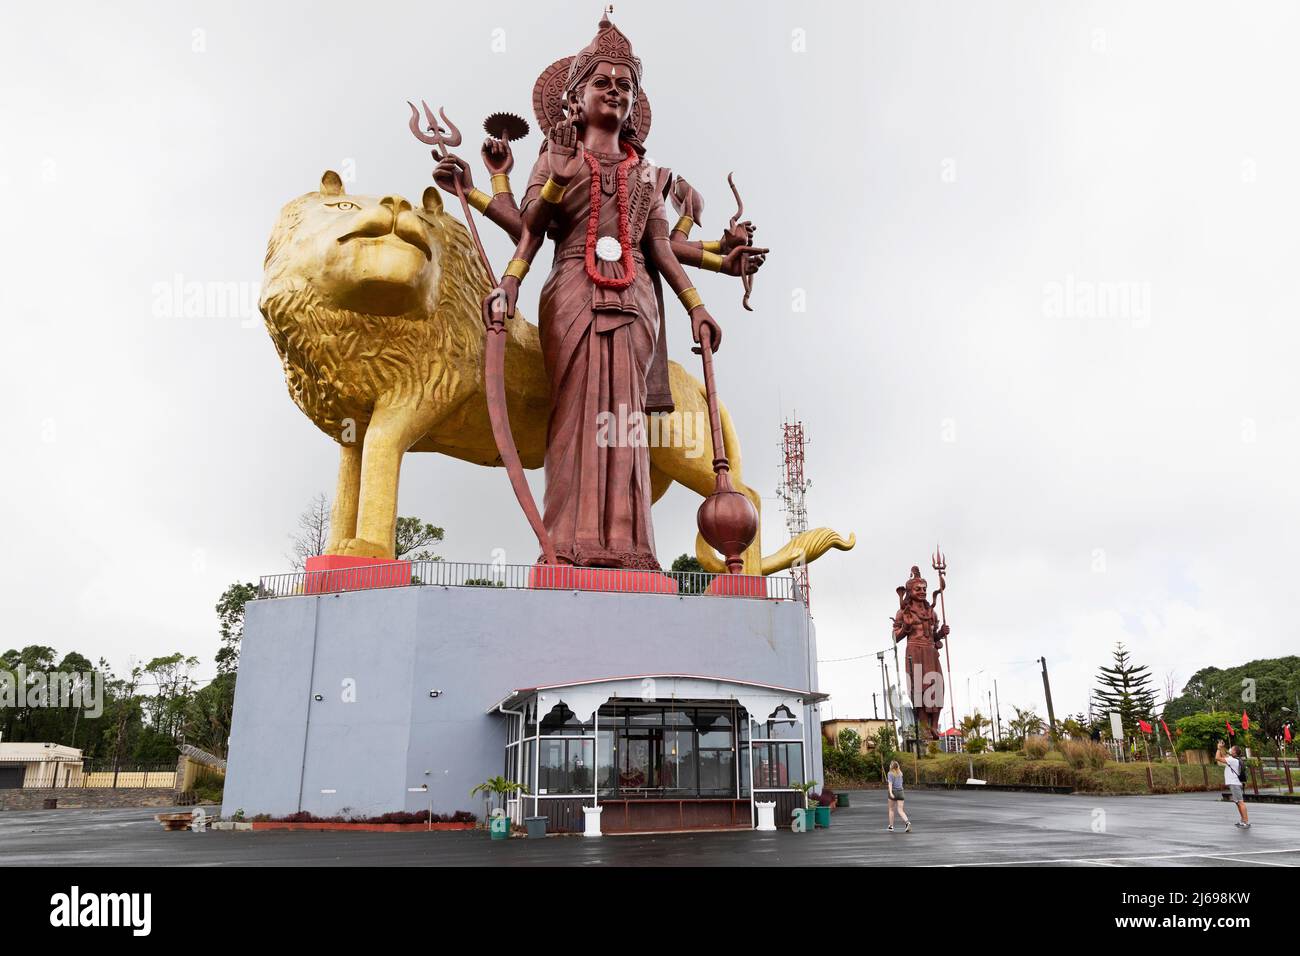 Statue of the Hindu goddess Durga, 108 feet tall, with her lion vehicle Manastala, at Ganga Talao, Mauritius, Indian Ocean, Africa Stock Photo